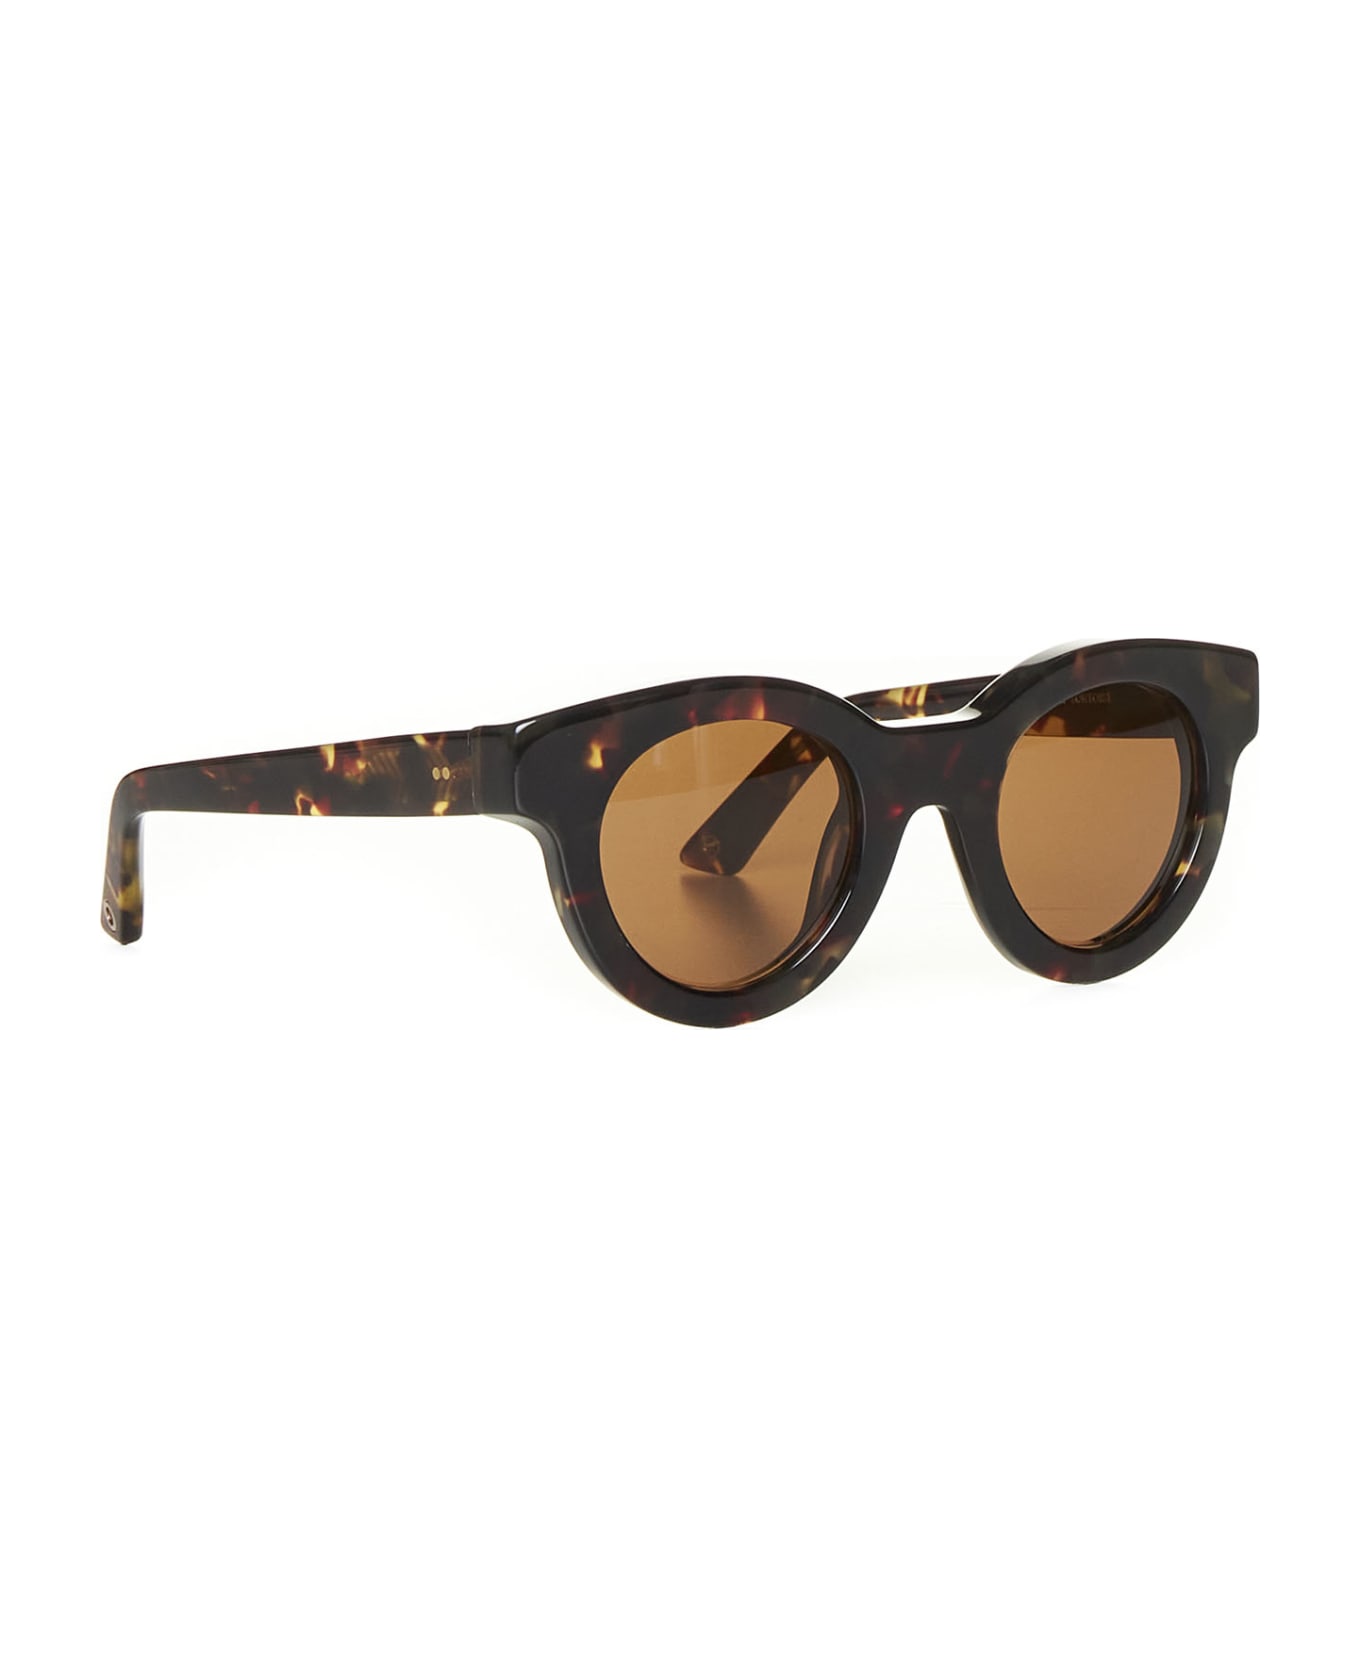 g.o.d Sunglasses - Yellow tortoise w brown lens